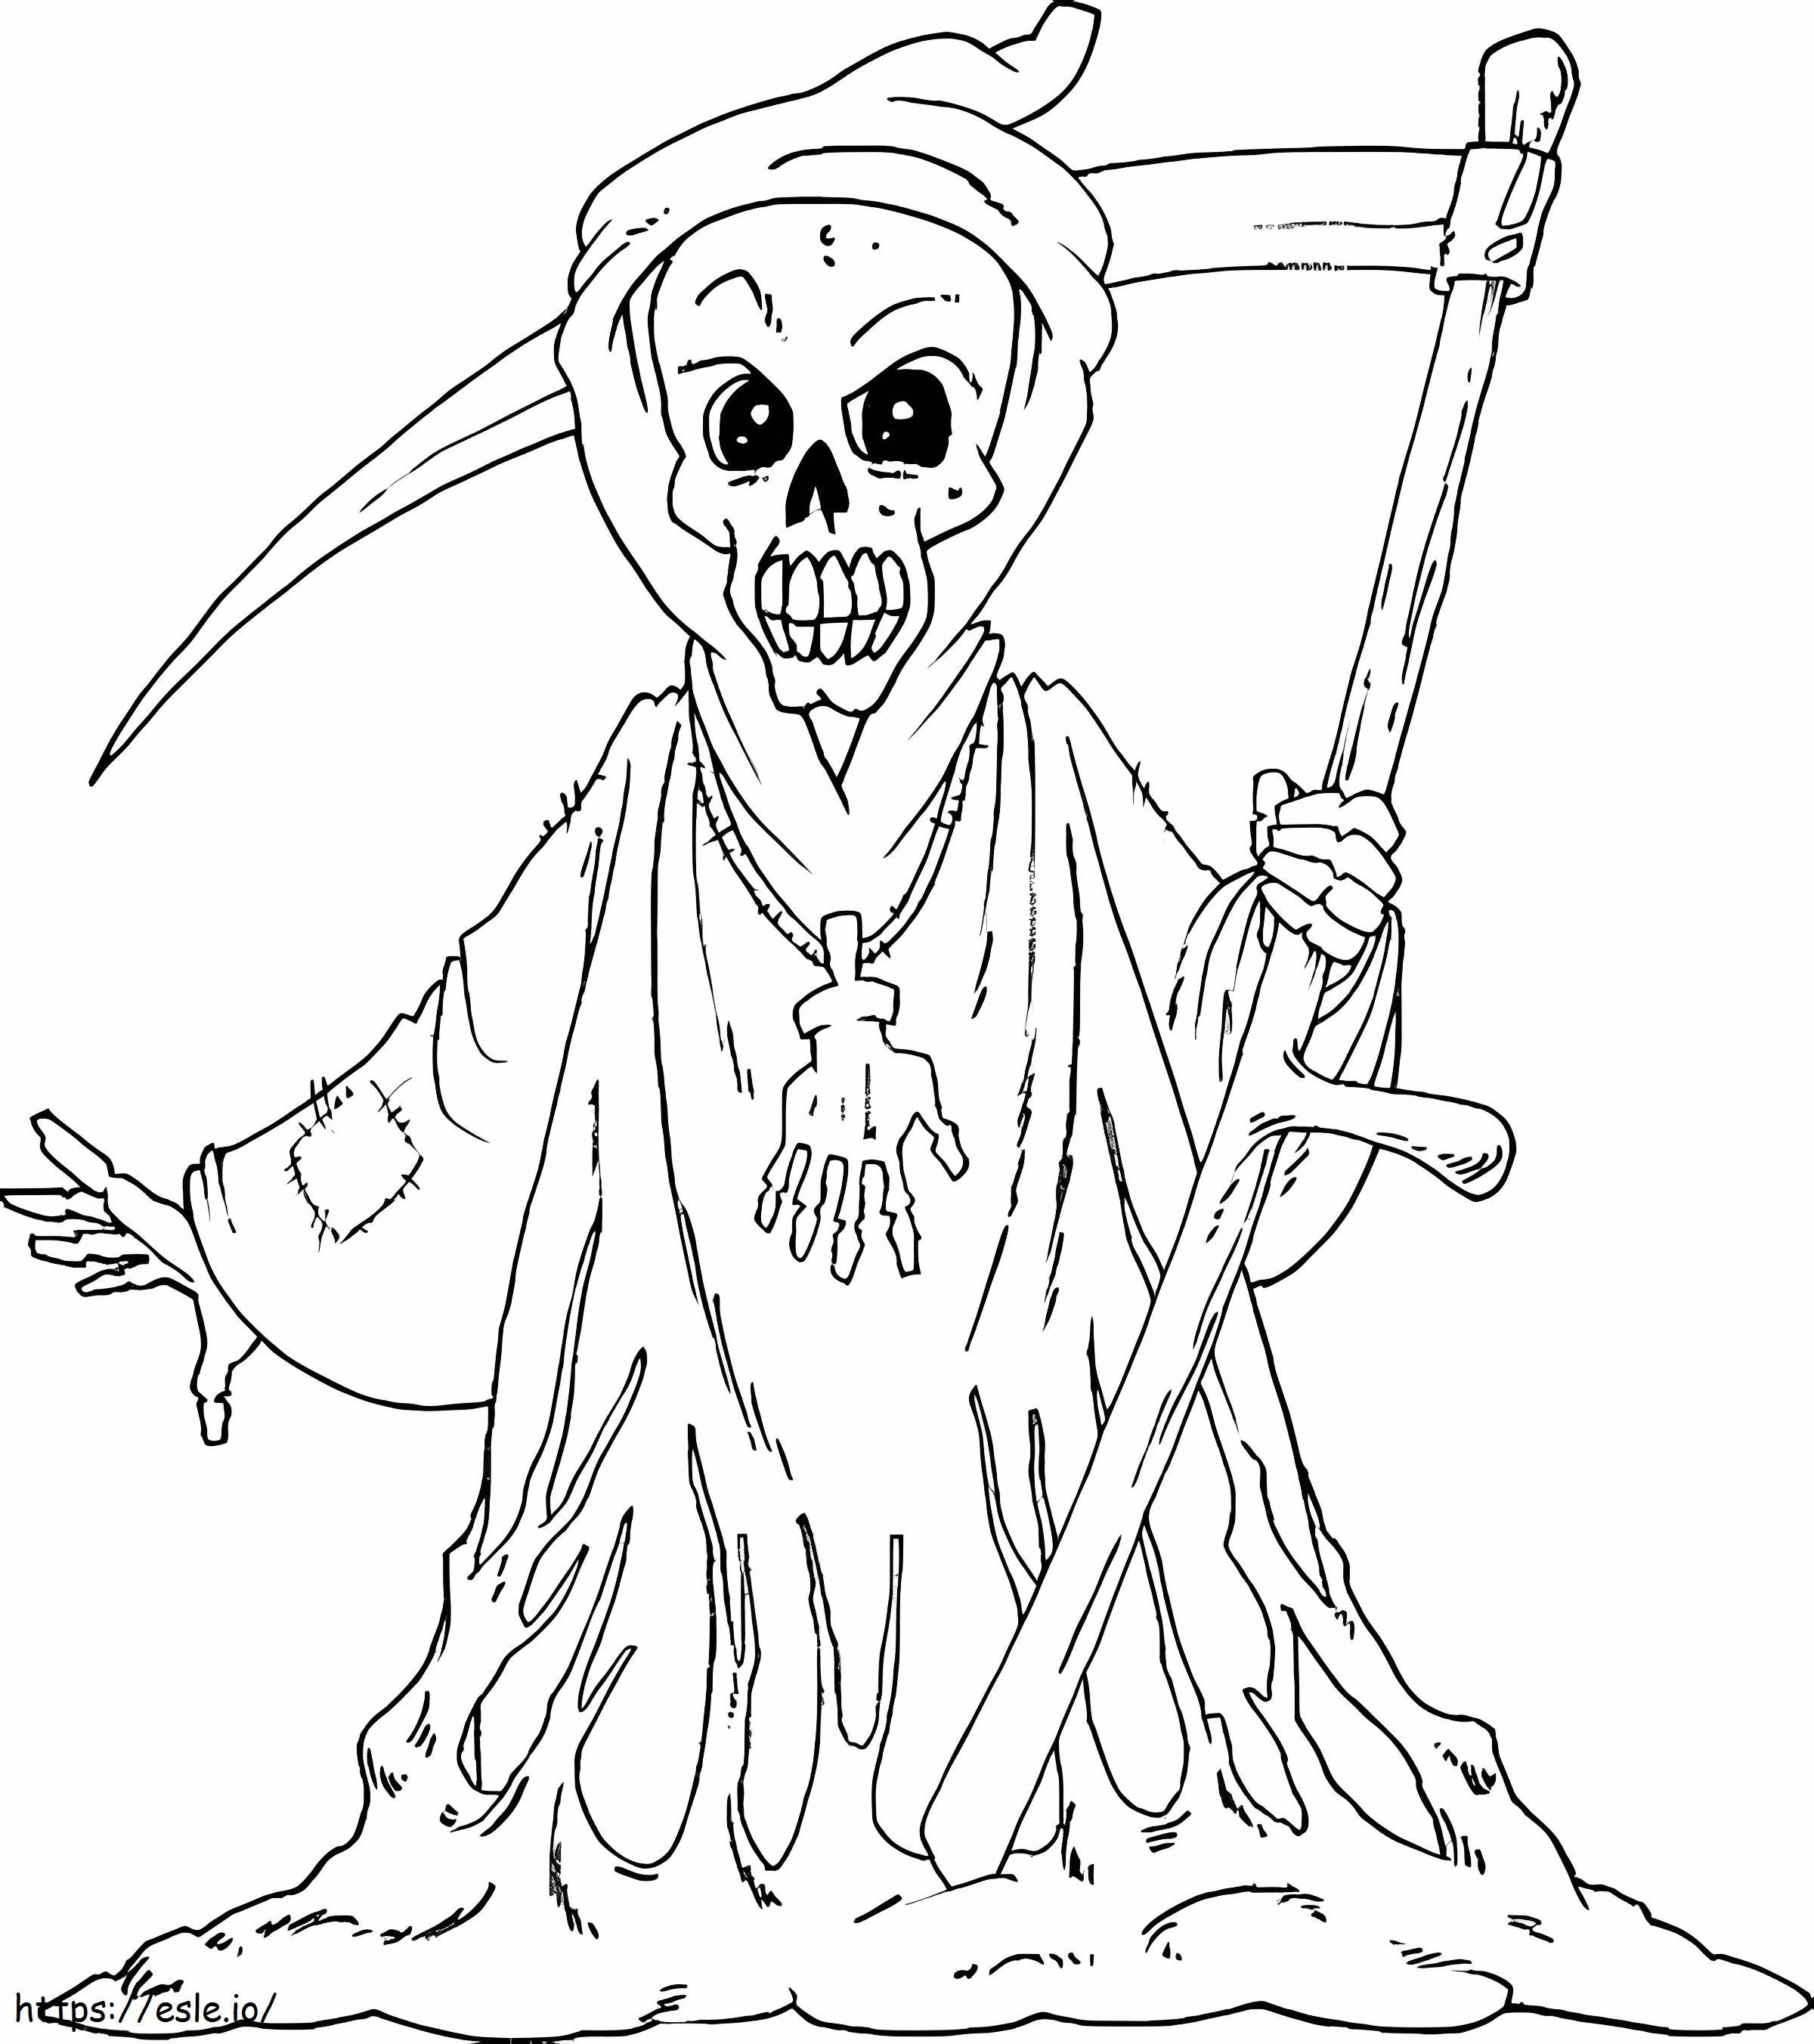 Creepy Grim Reaper coloring page